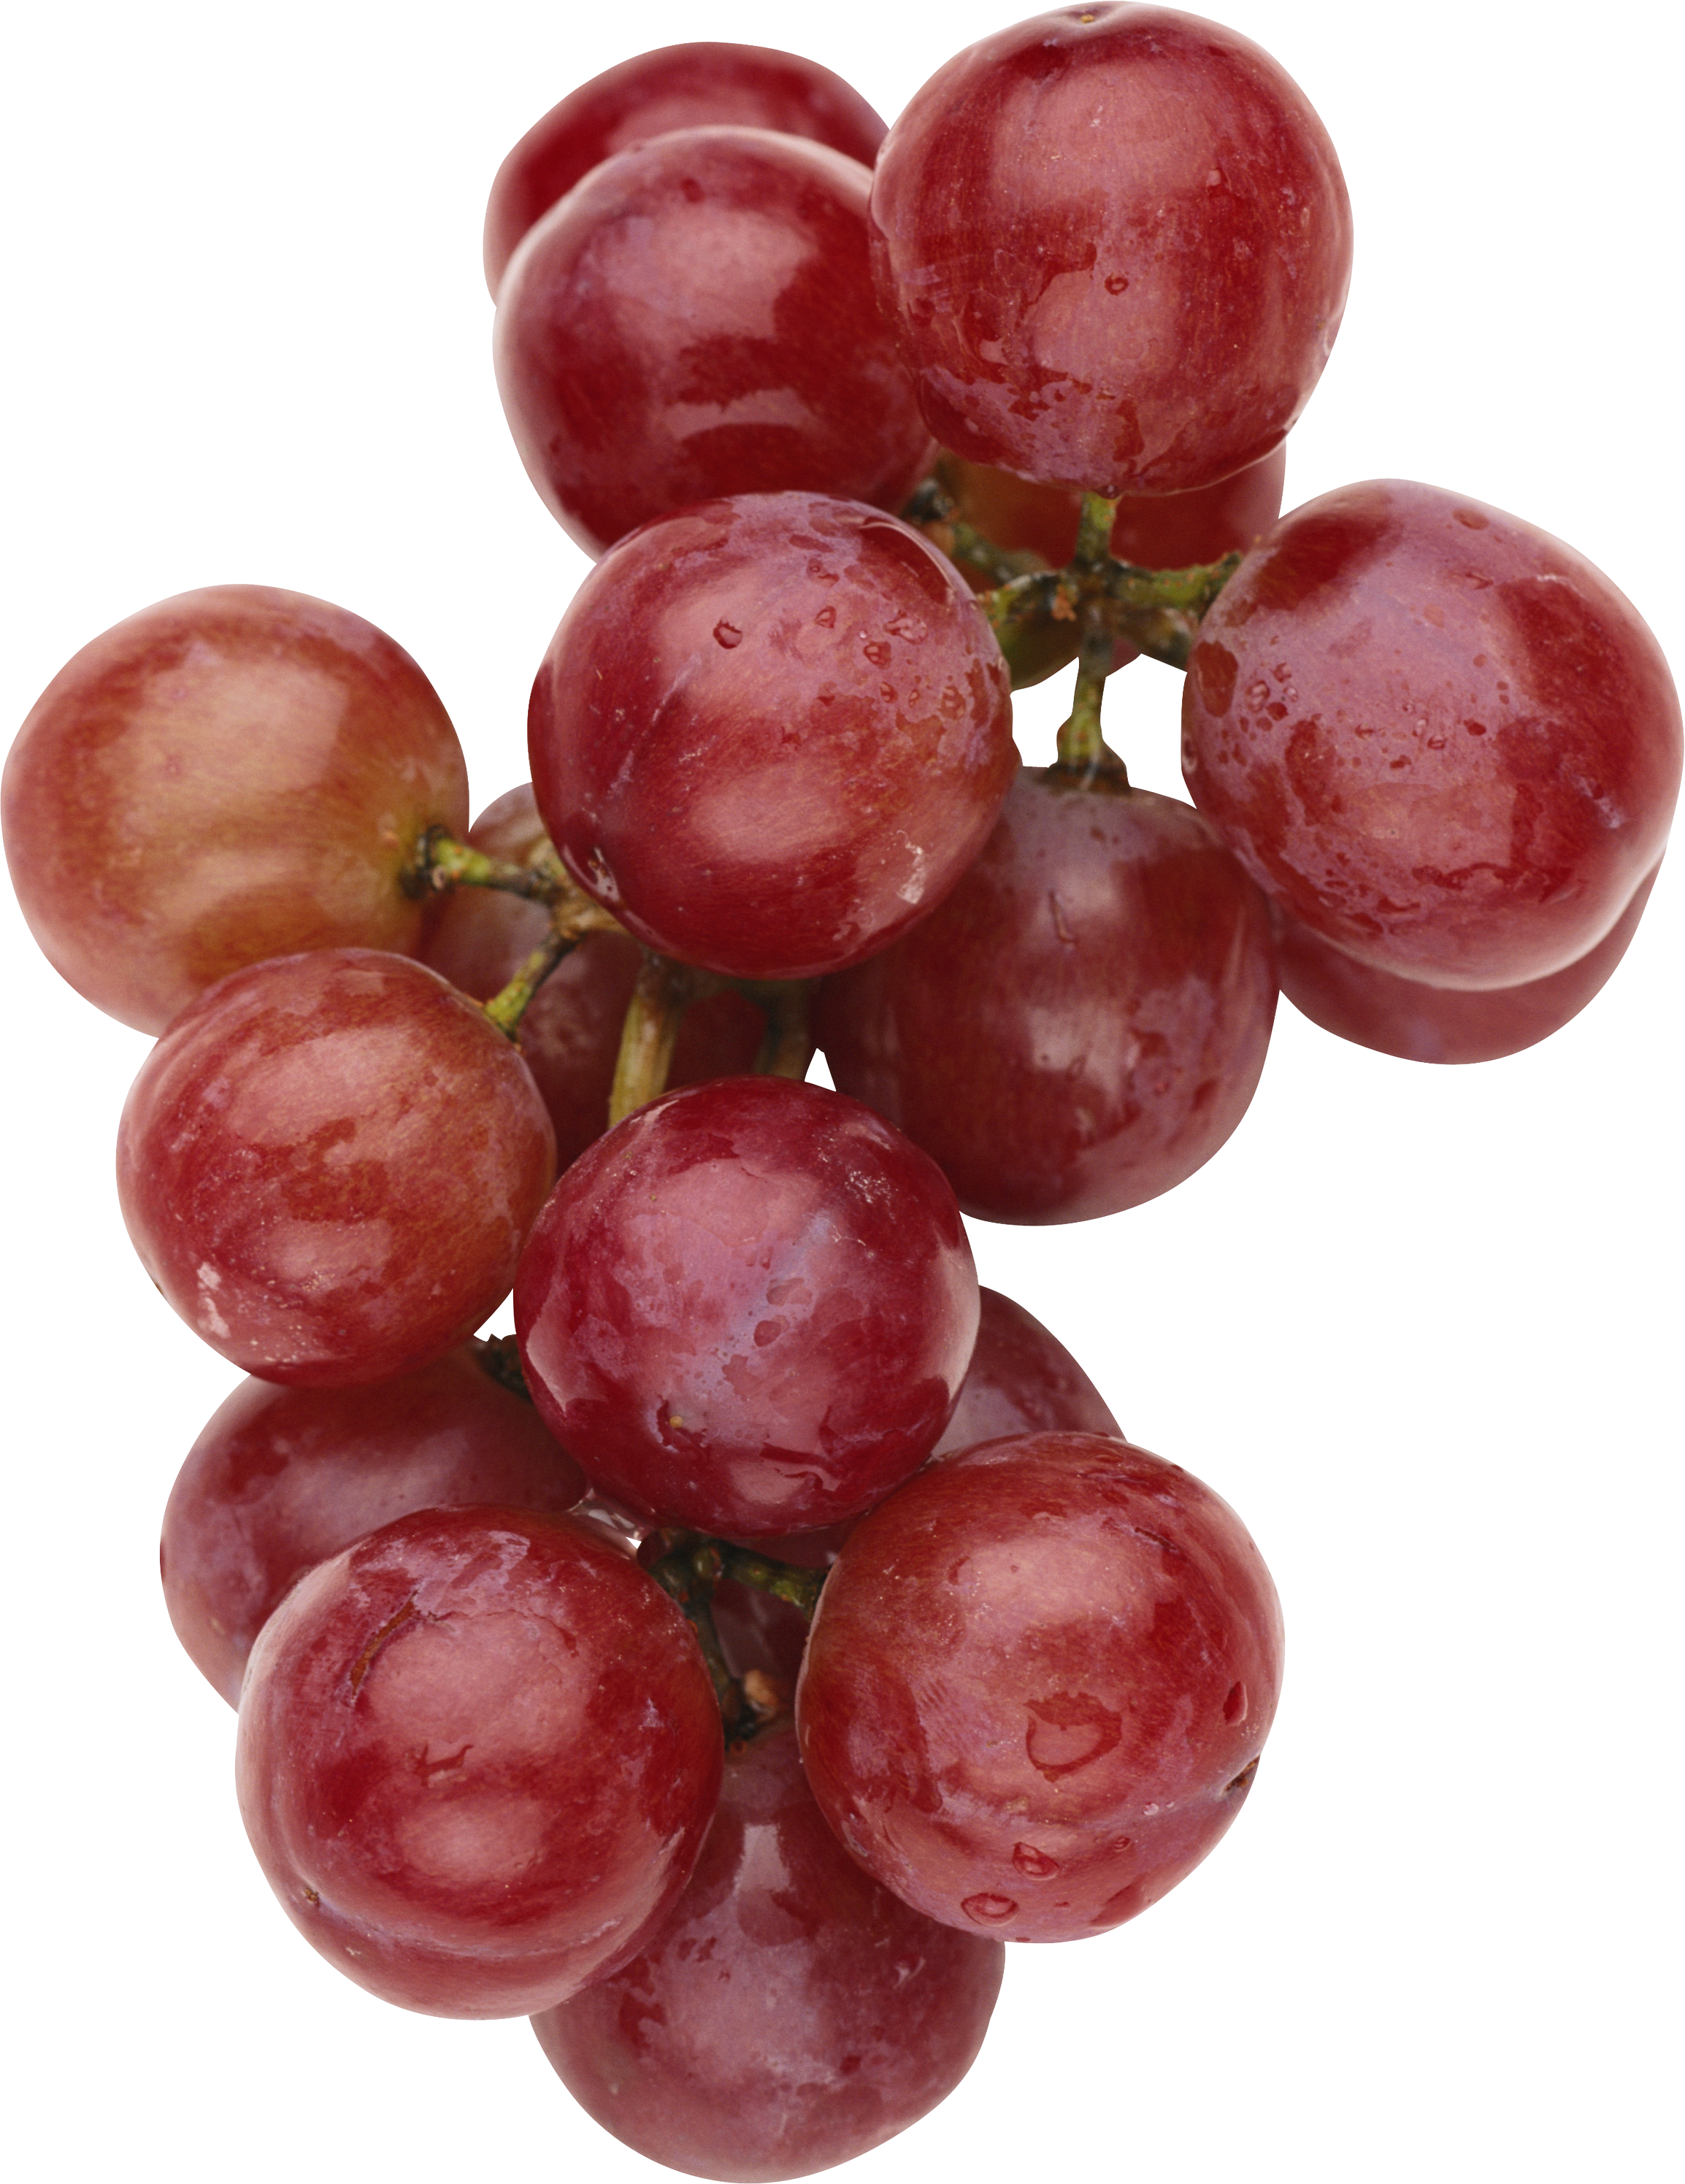 grapes clipart health food